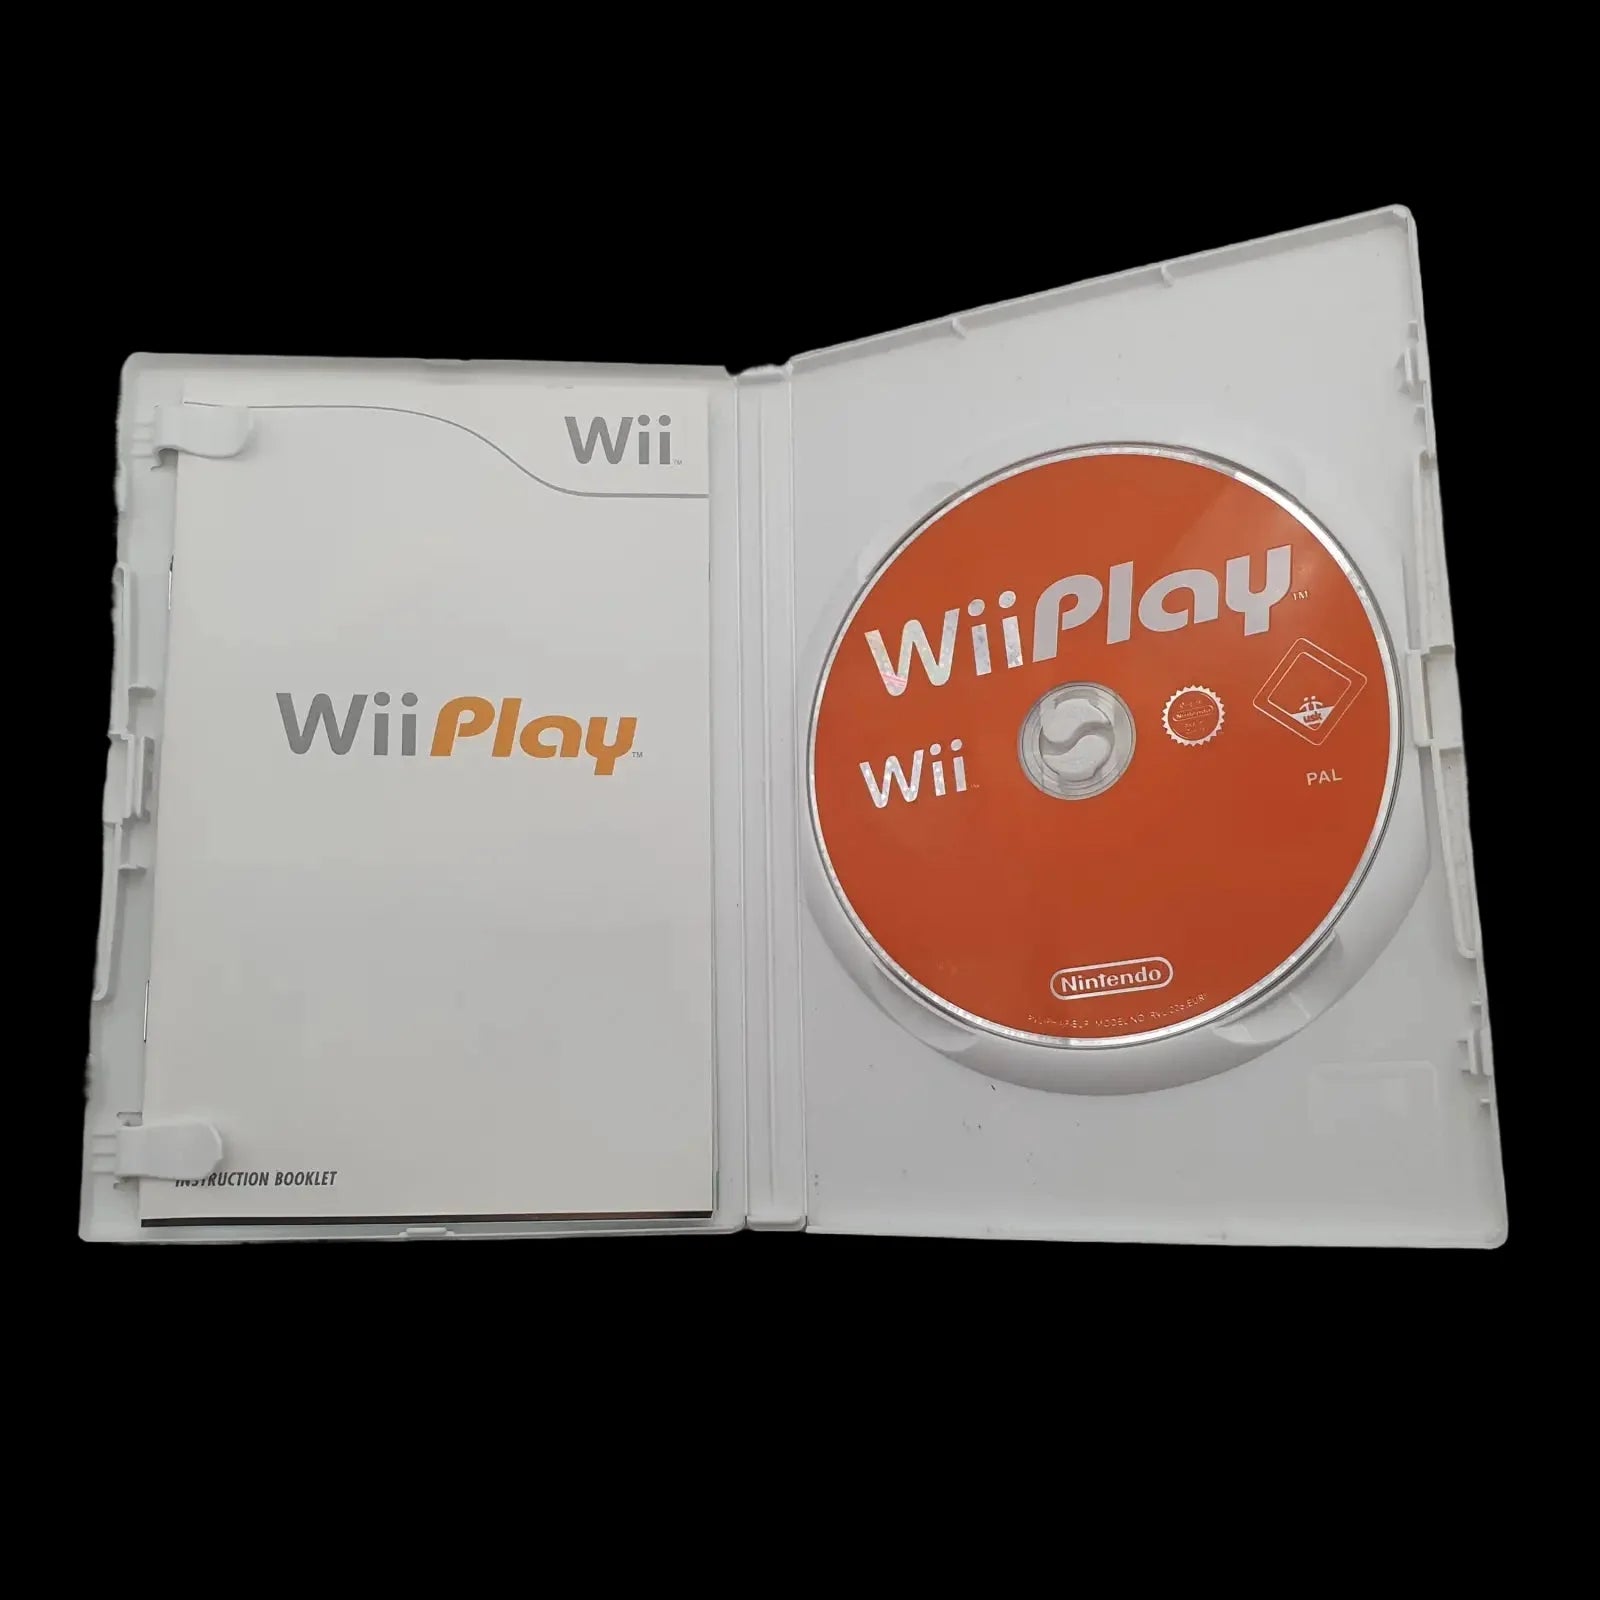 Wii Play Nintendo 2007 Video Game Cib - Games - 3 - 2397